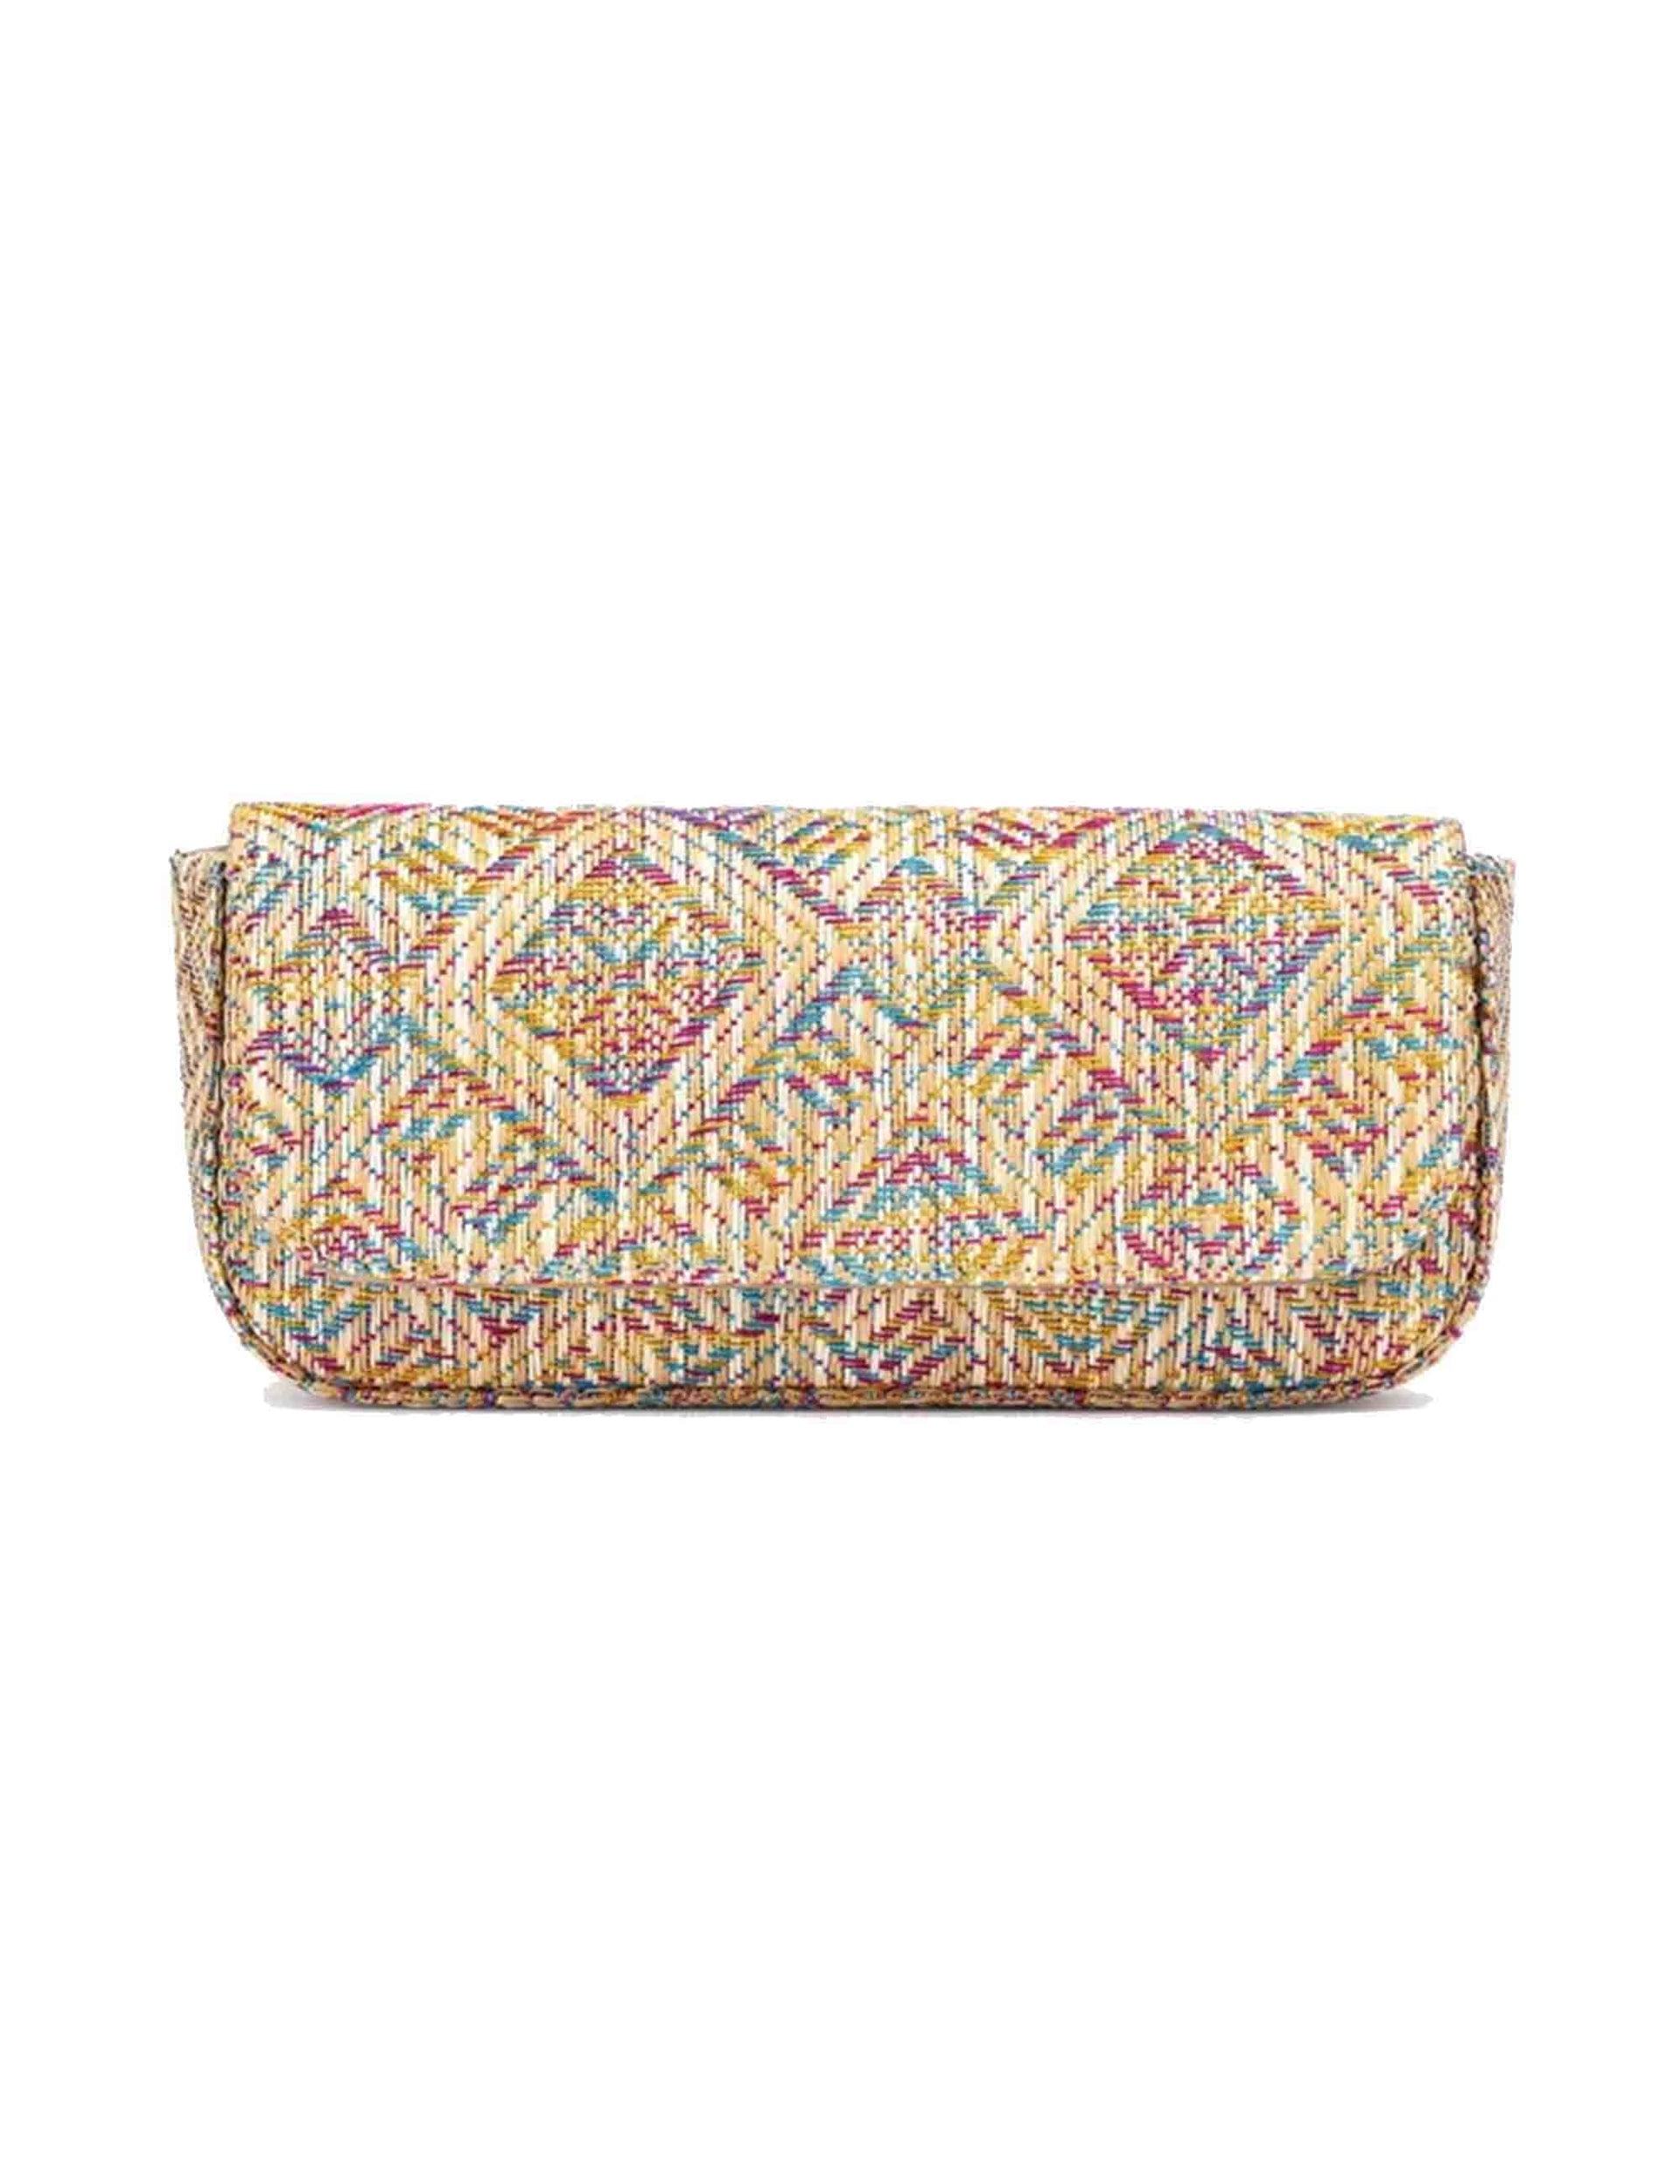 Women's multicolor patterned raffia clutch bag with gold shoulder strap